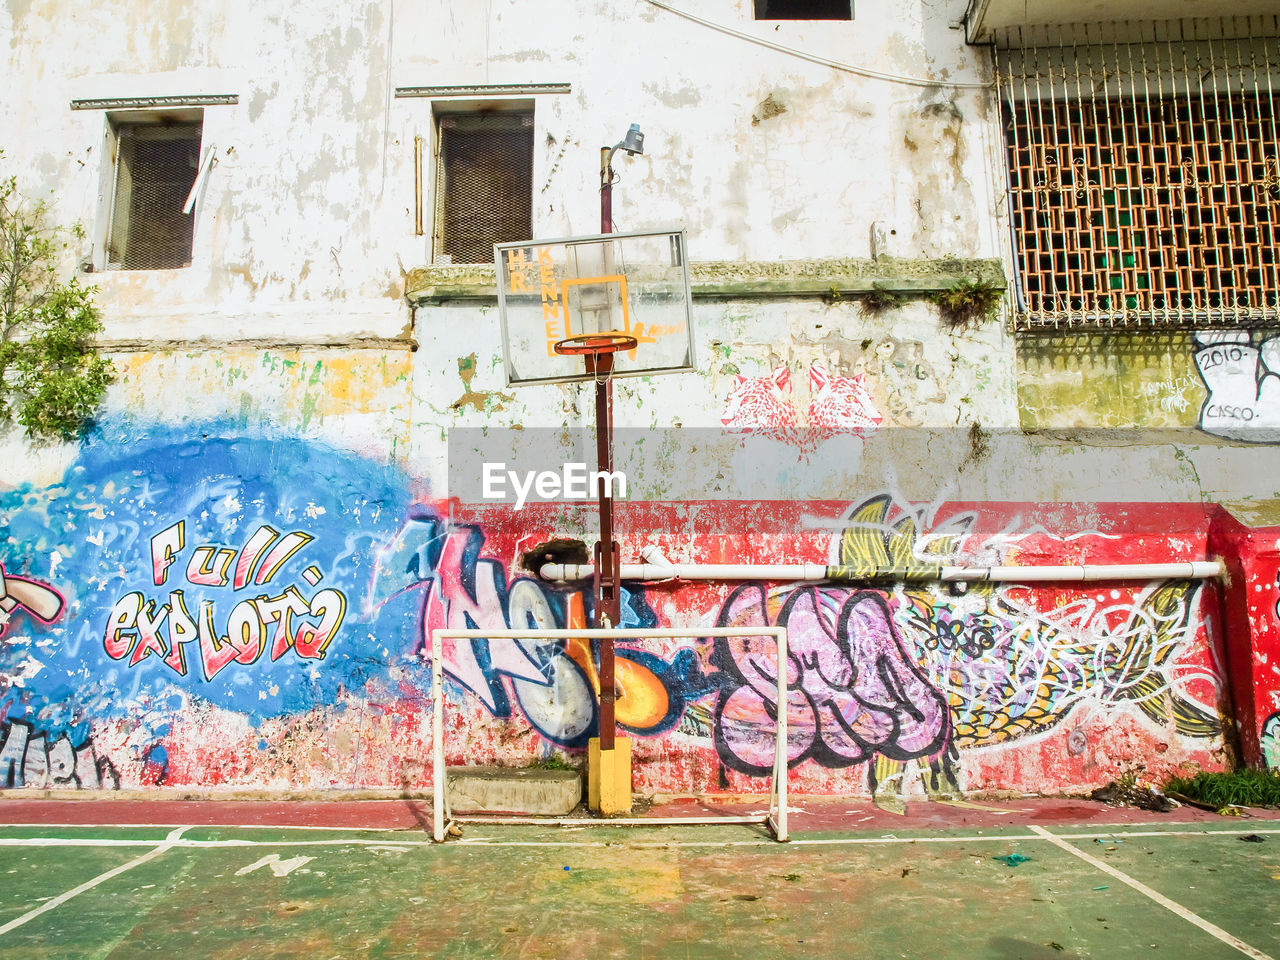 Graffiti and basketball hoop